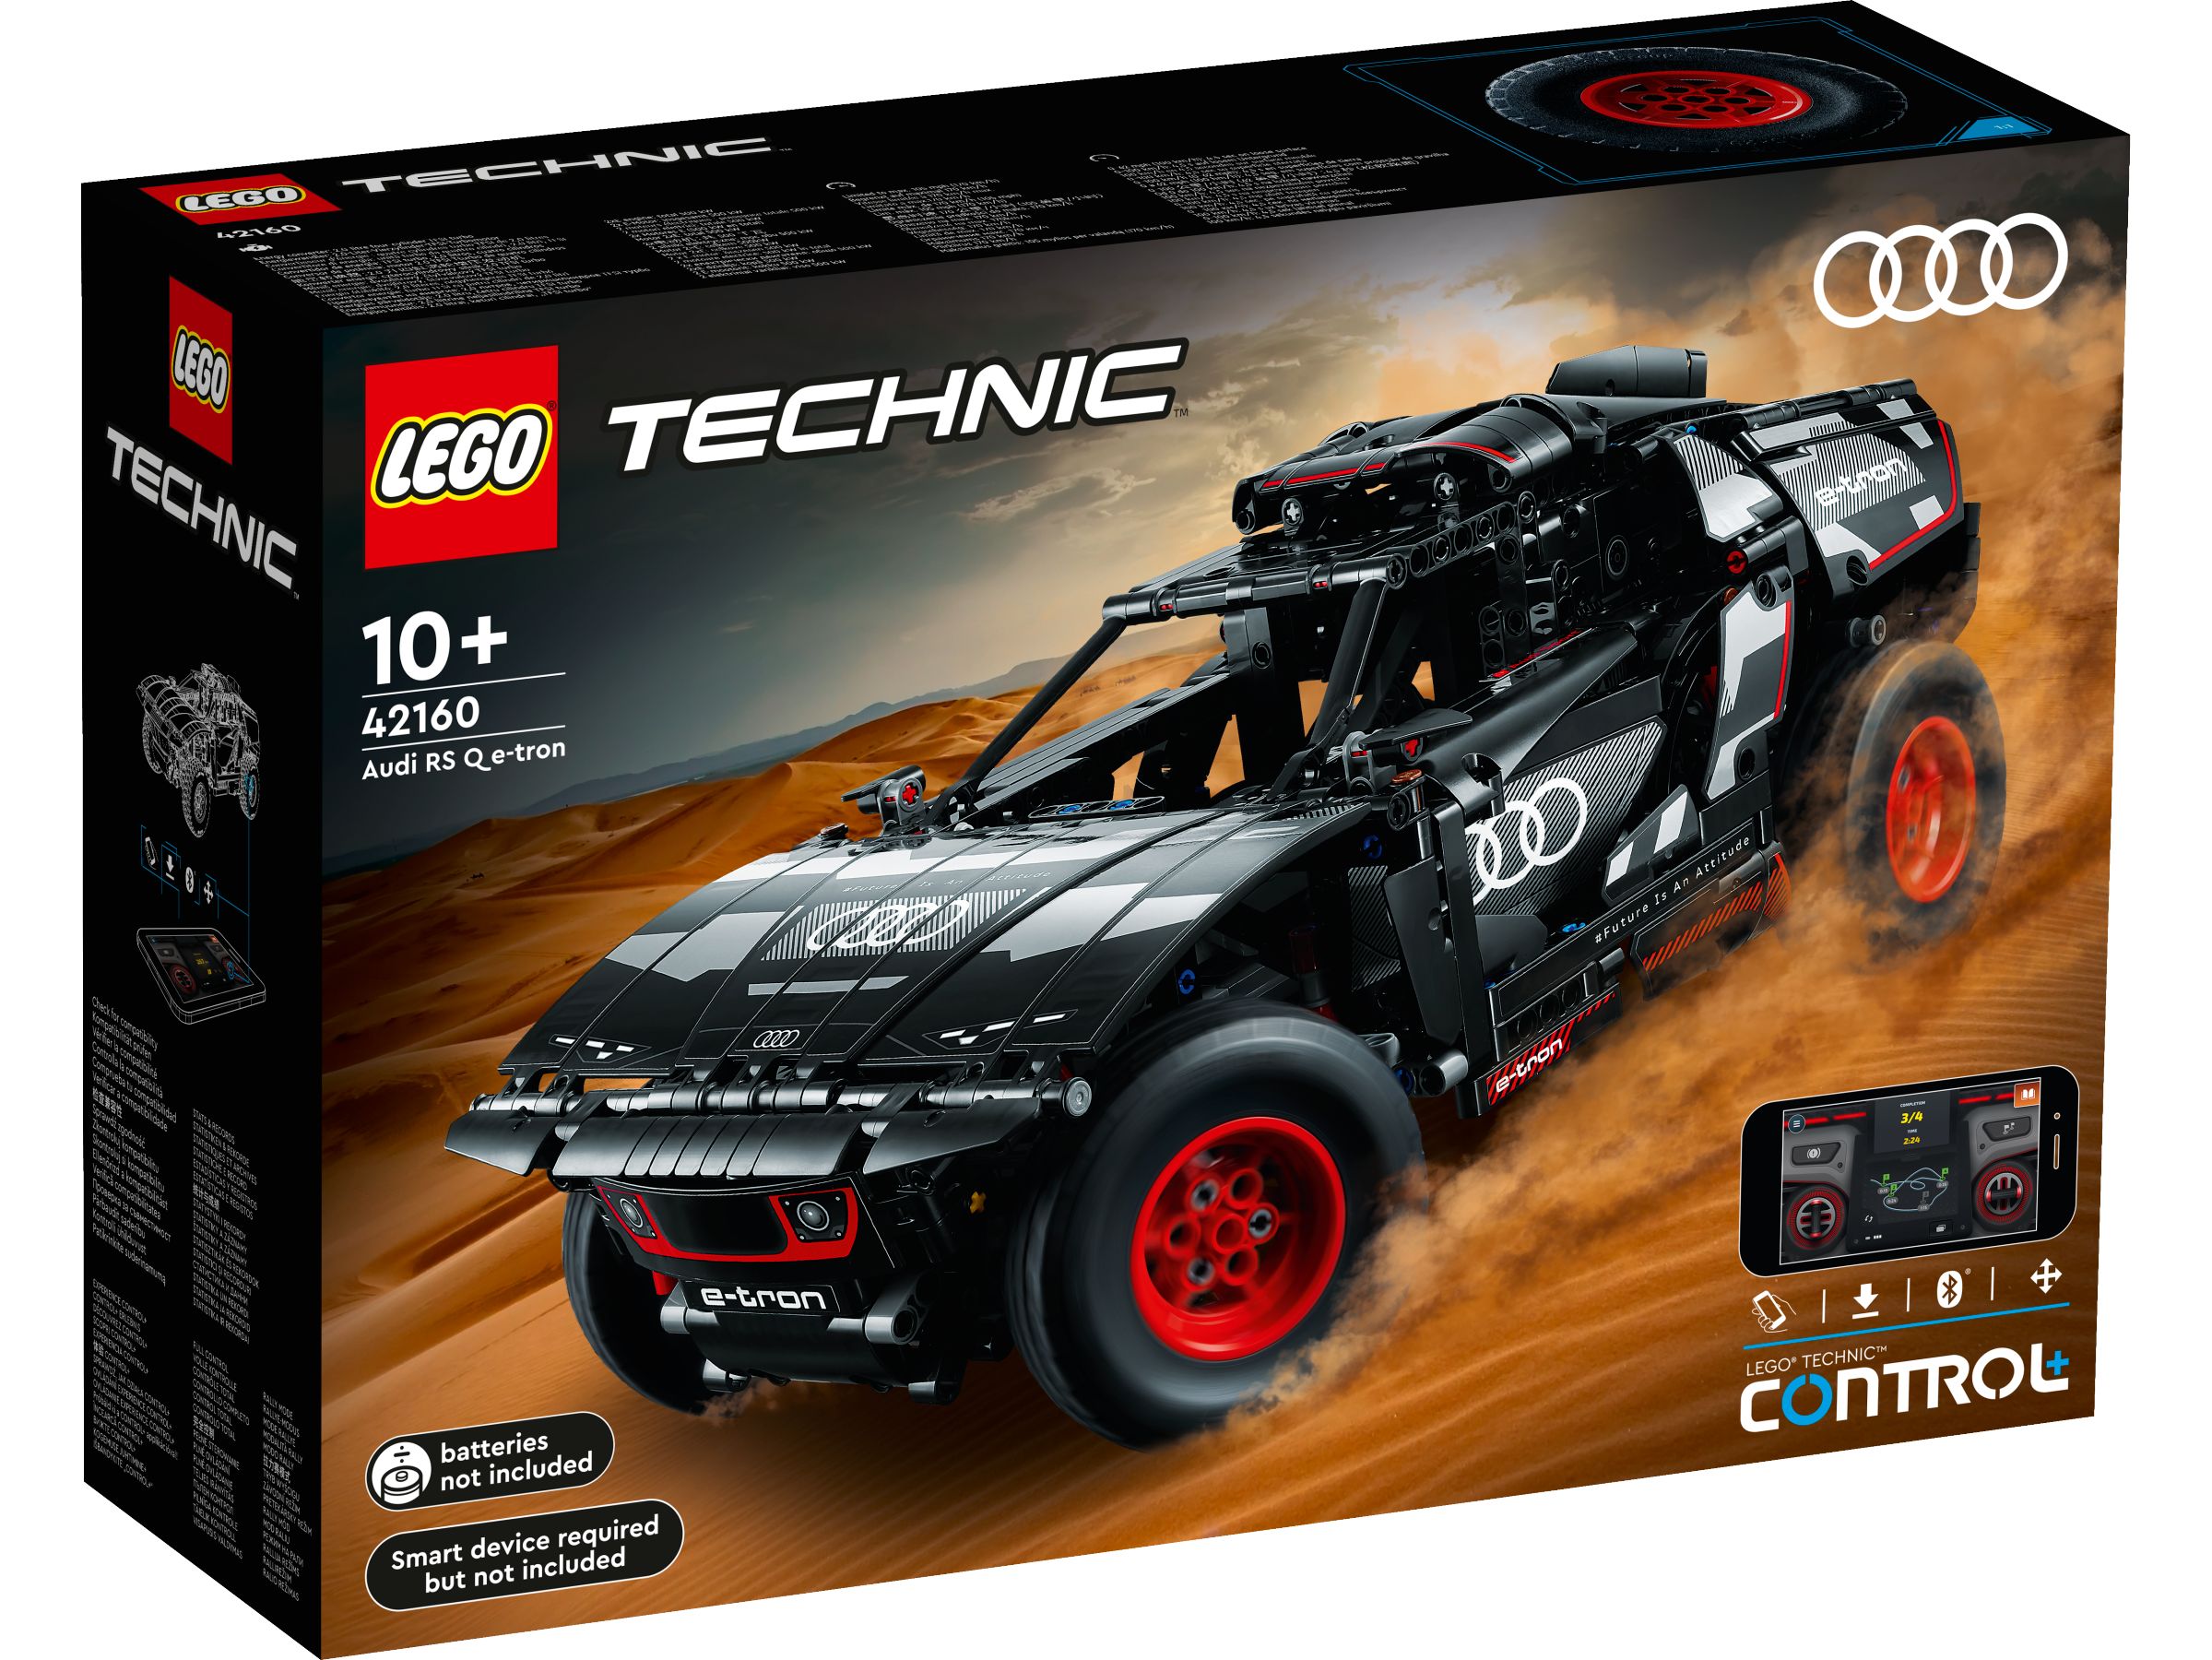 LEGO Technic 42160 Audi RS Q e-tron LEGO_42160_Box1_v29.jpg